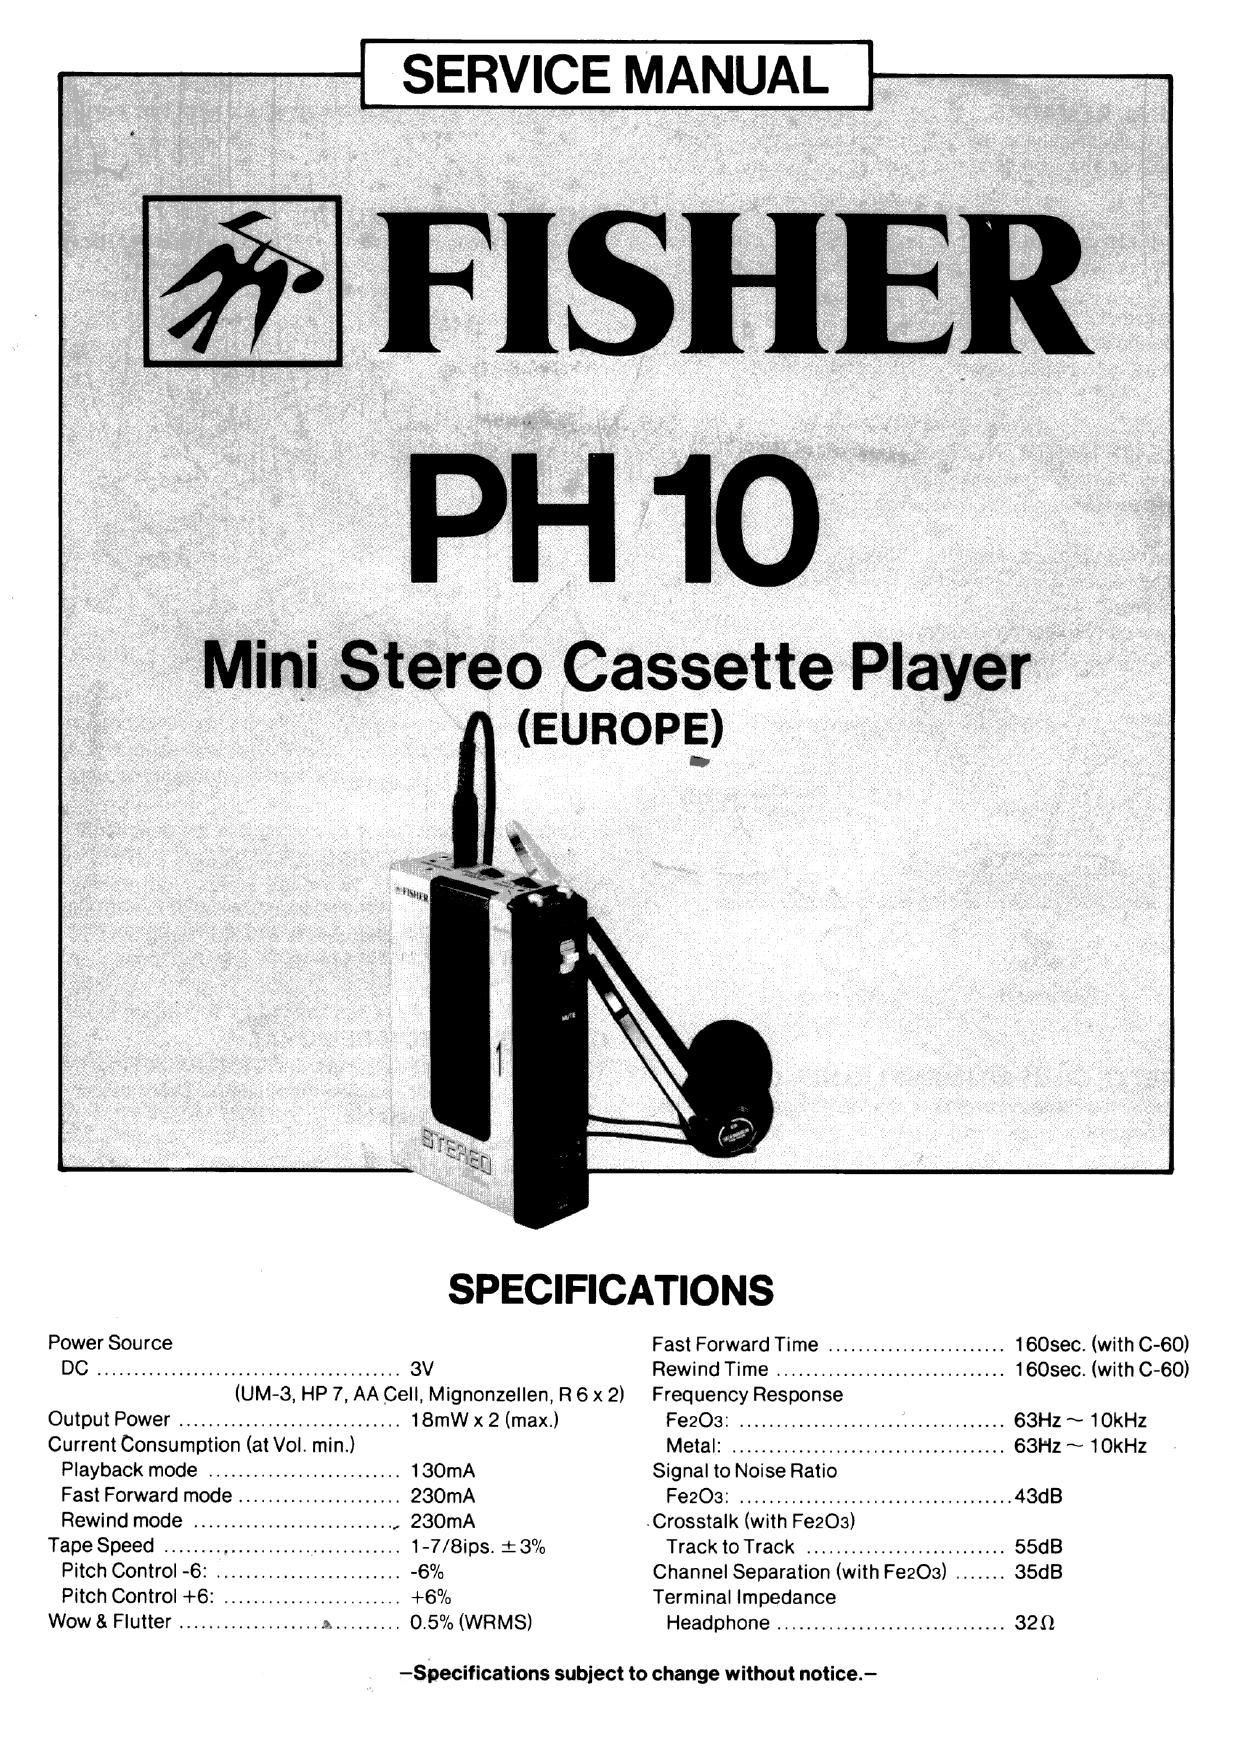 Fisher PH 10 Service Manual